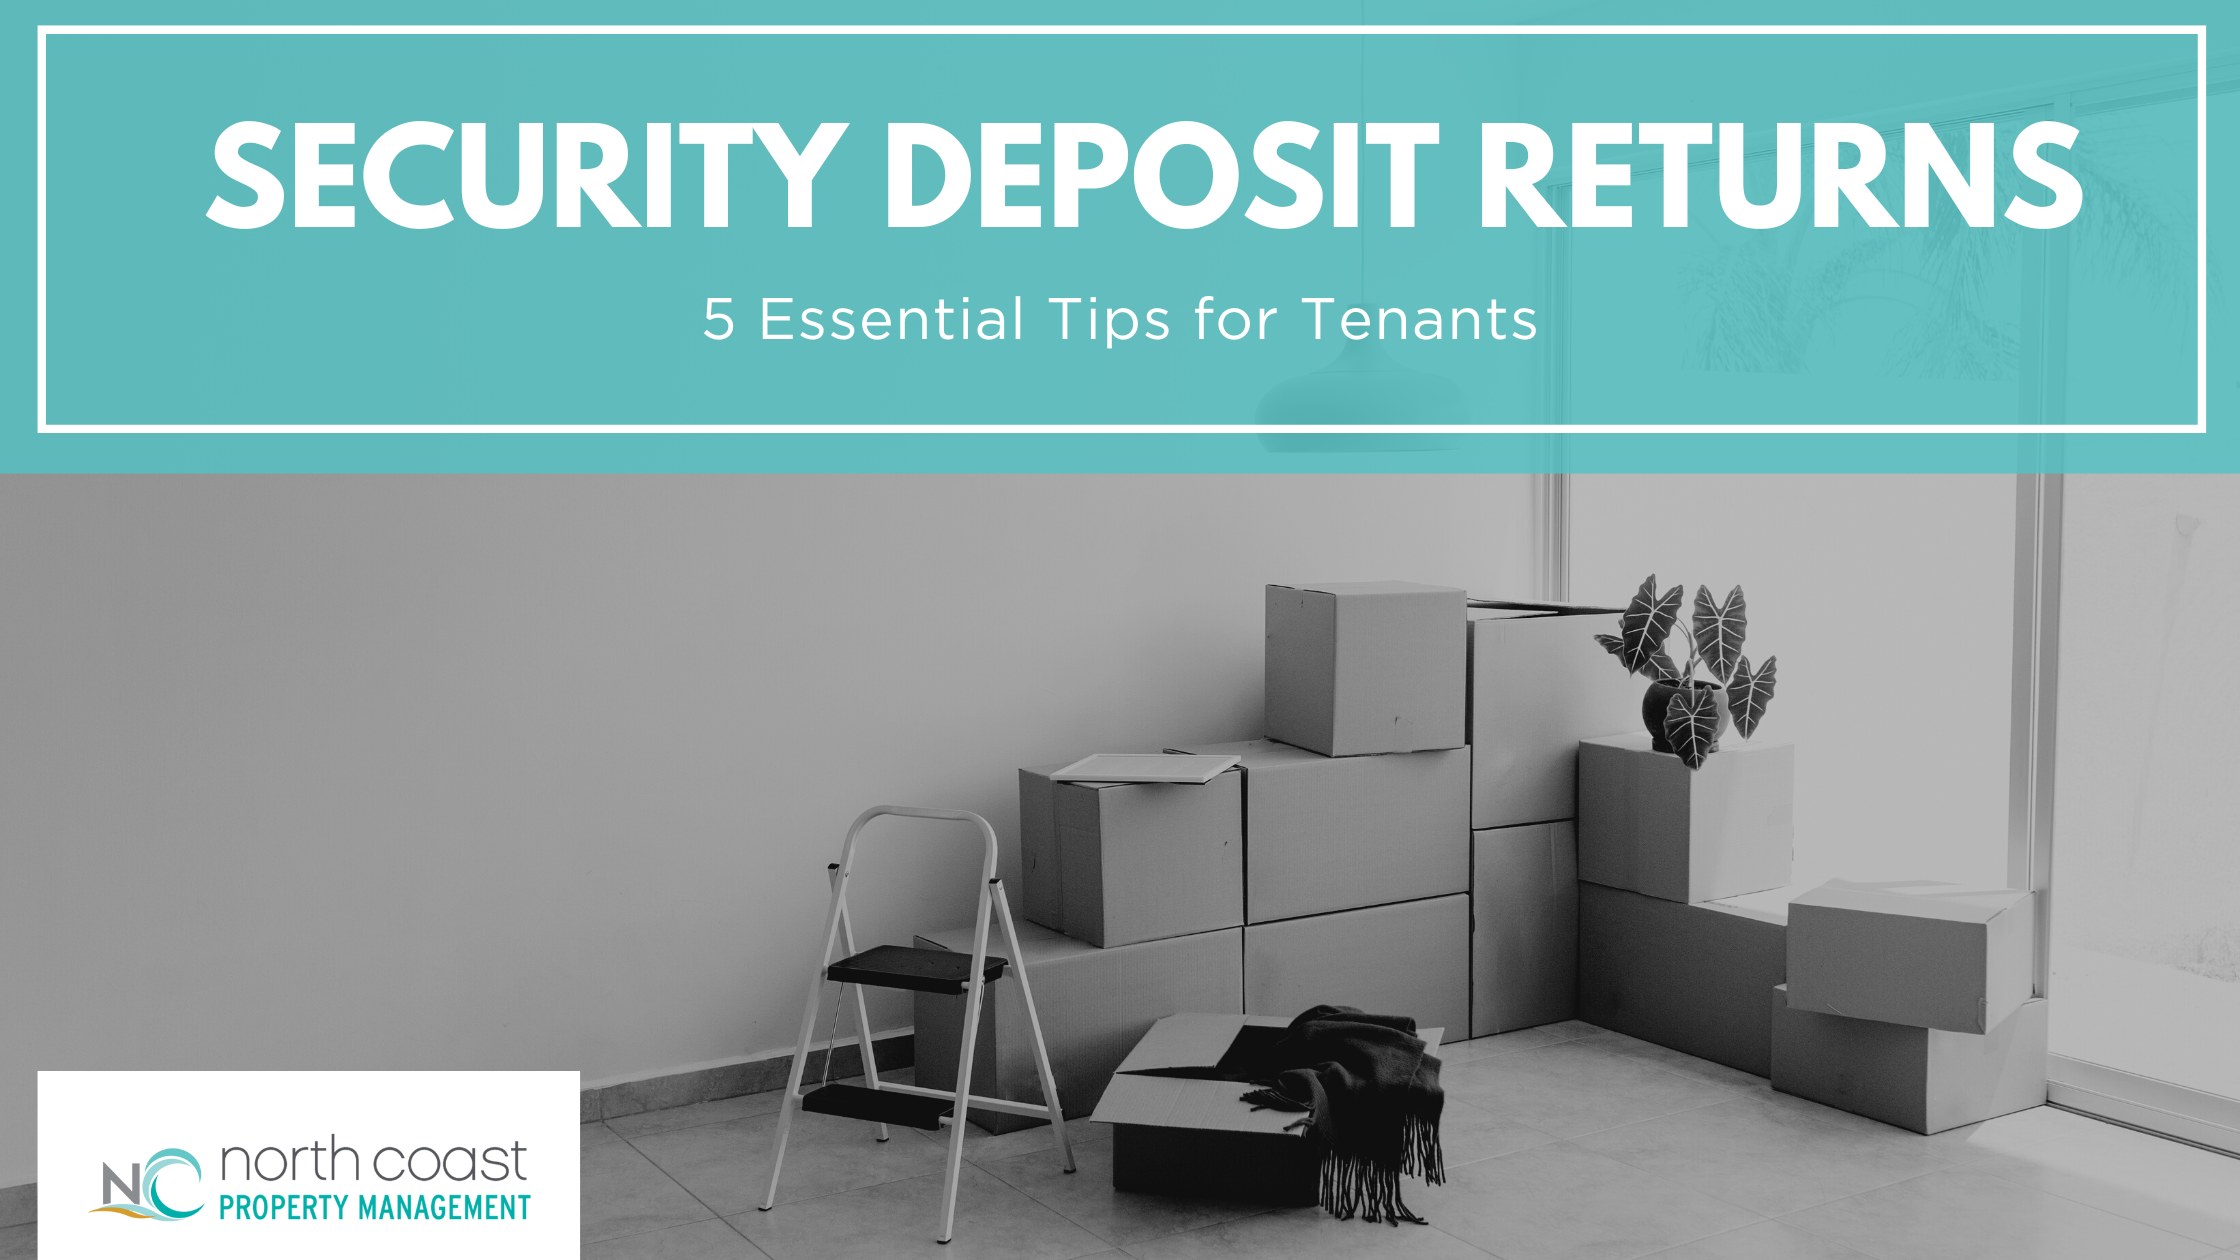 Security Deposit Returns: 5 Essential Tips for Tenants